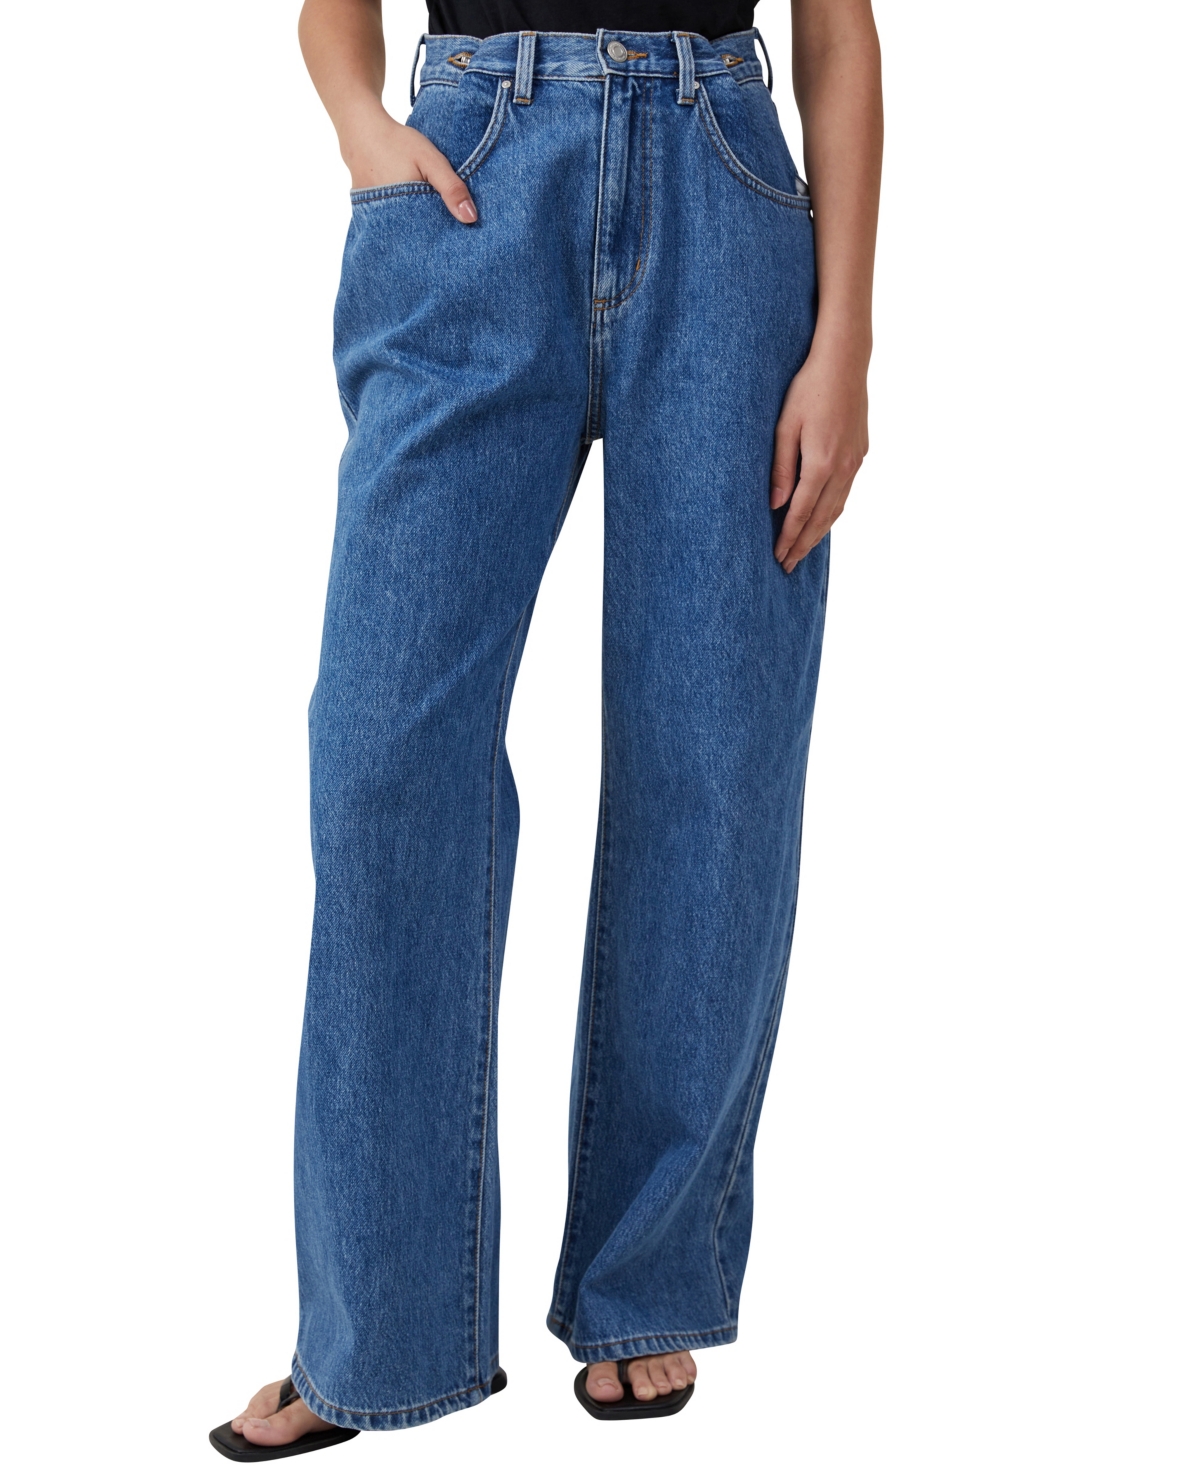 Women's Adjustable Wide Jeans - Crystal Blue